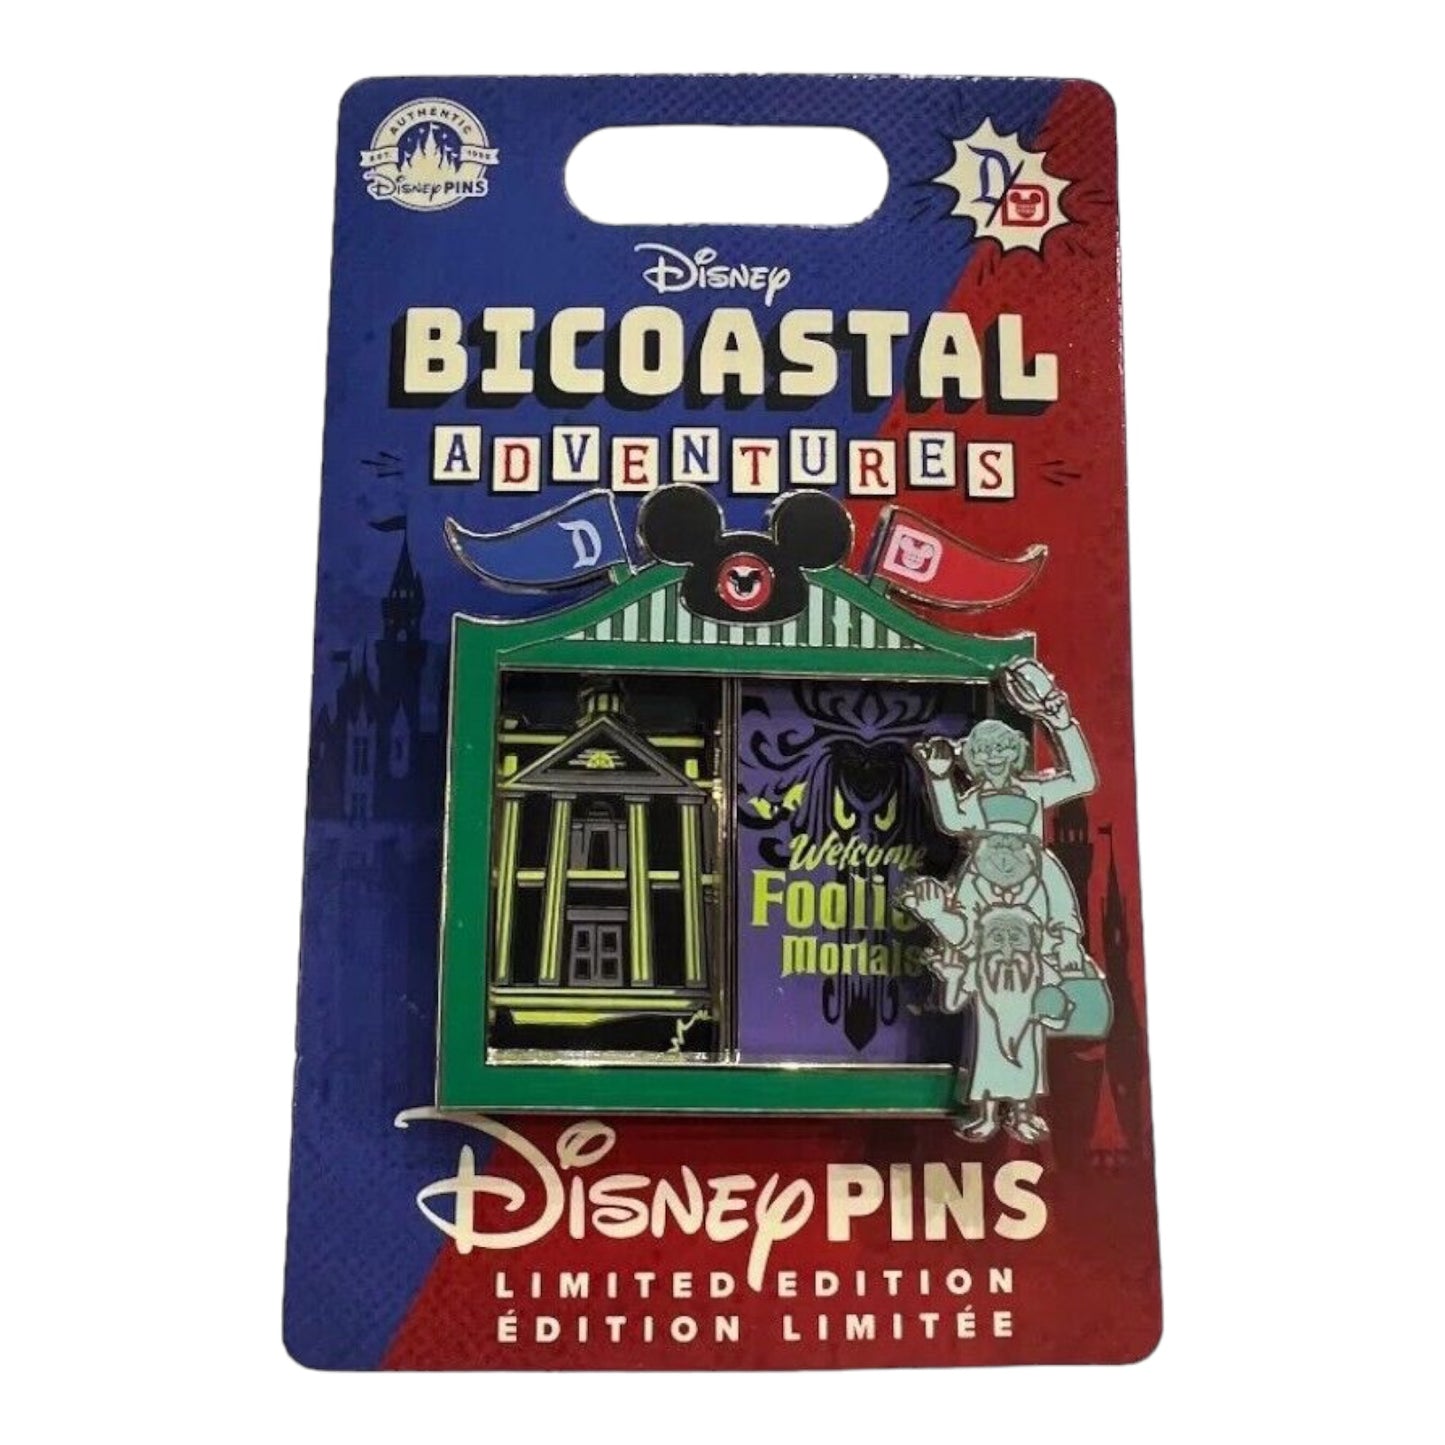 Disney Bicoastal Adventures Haunted Mansion Pin - Limited Edition